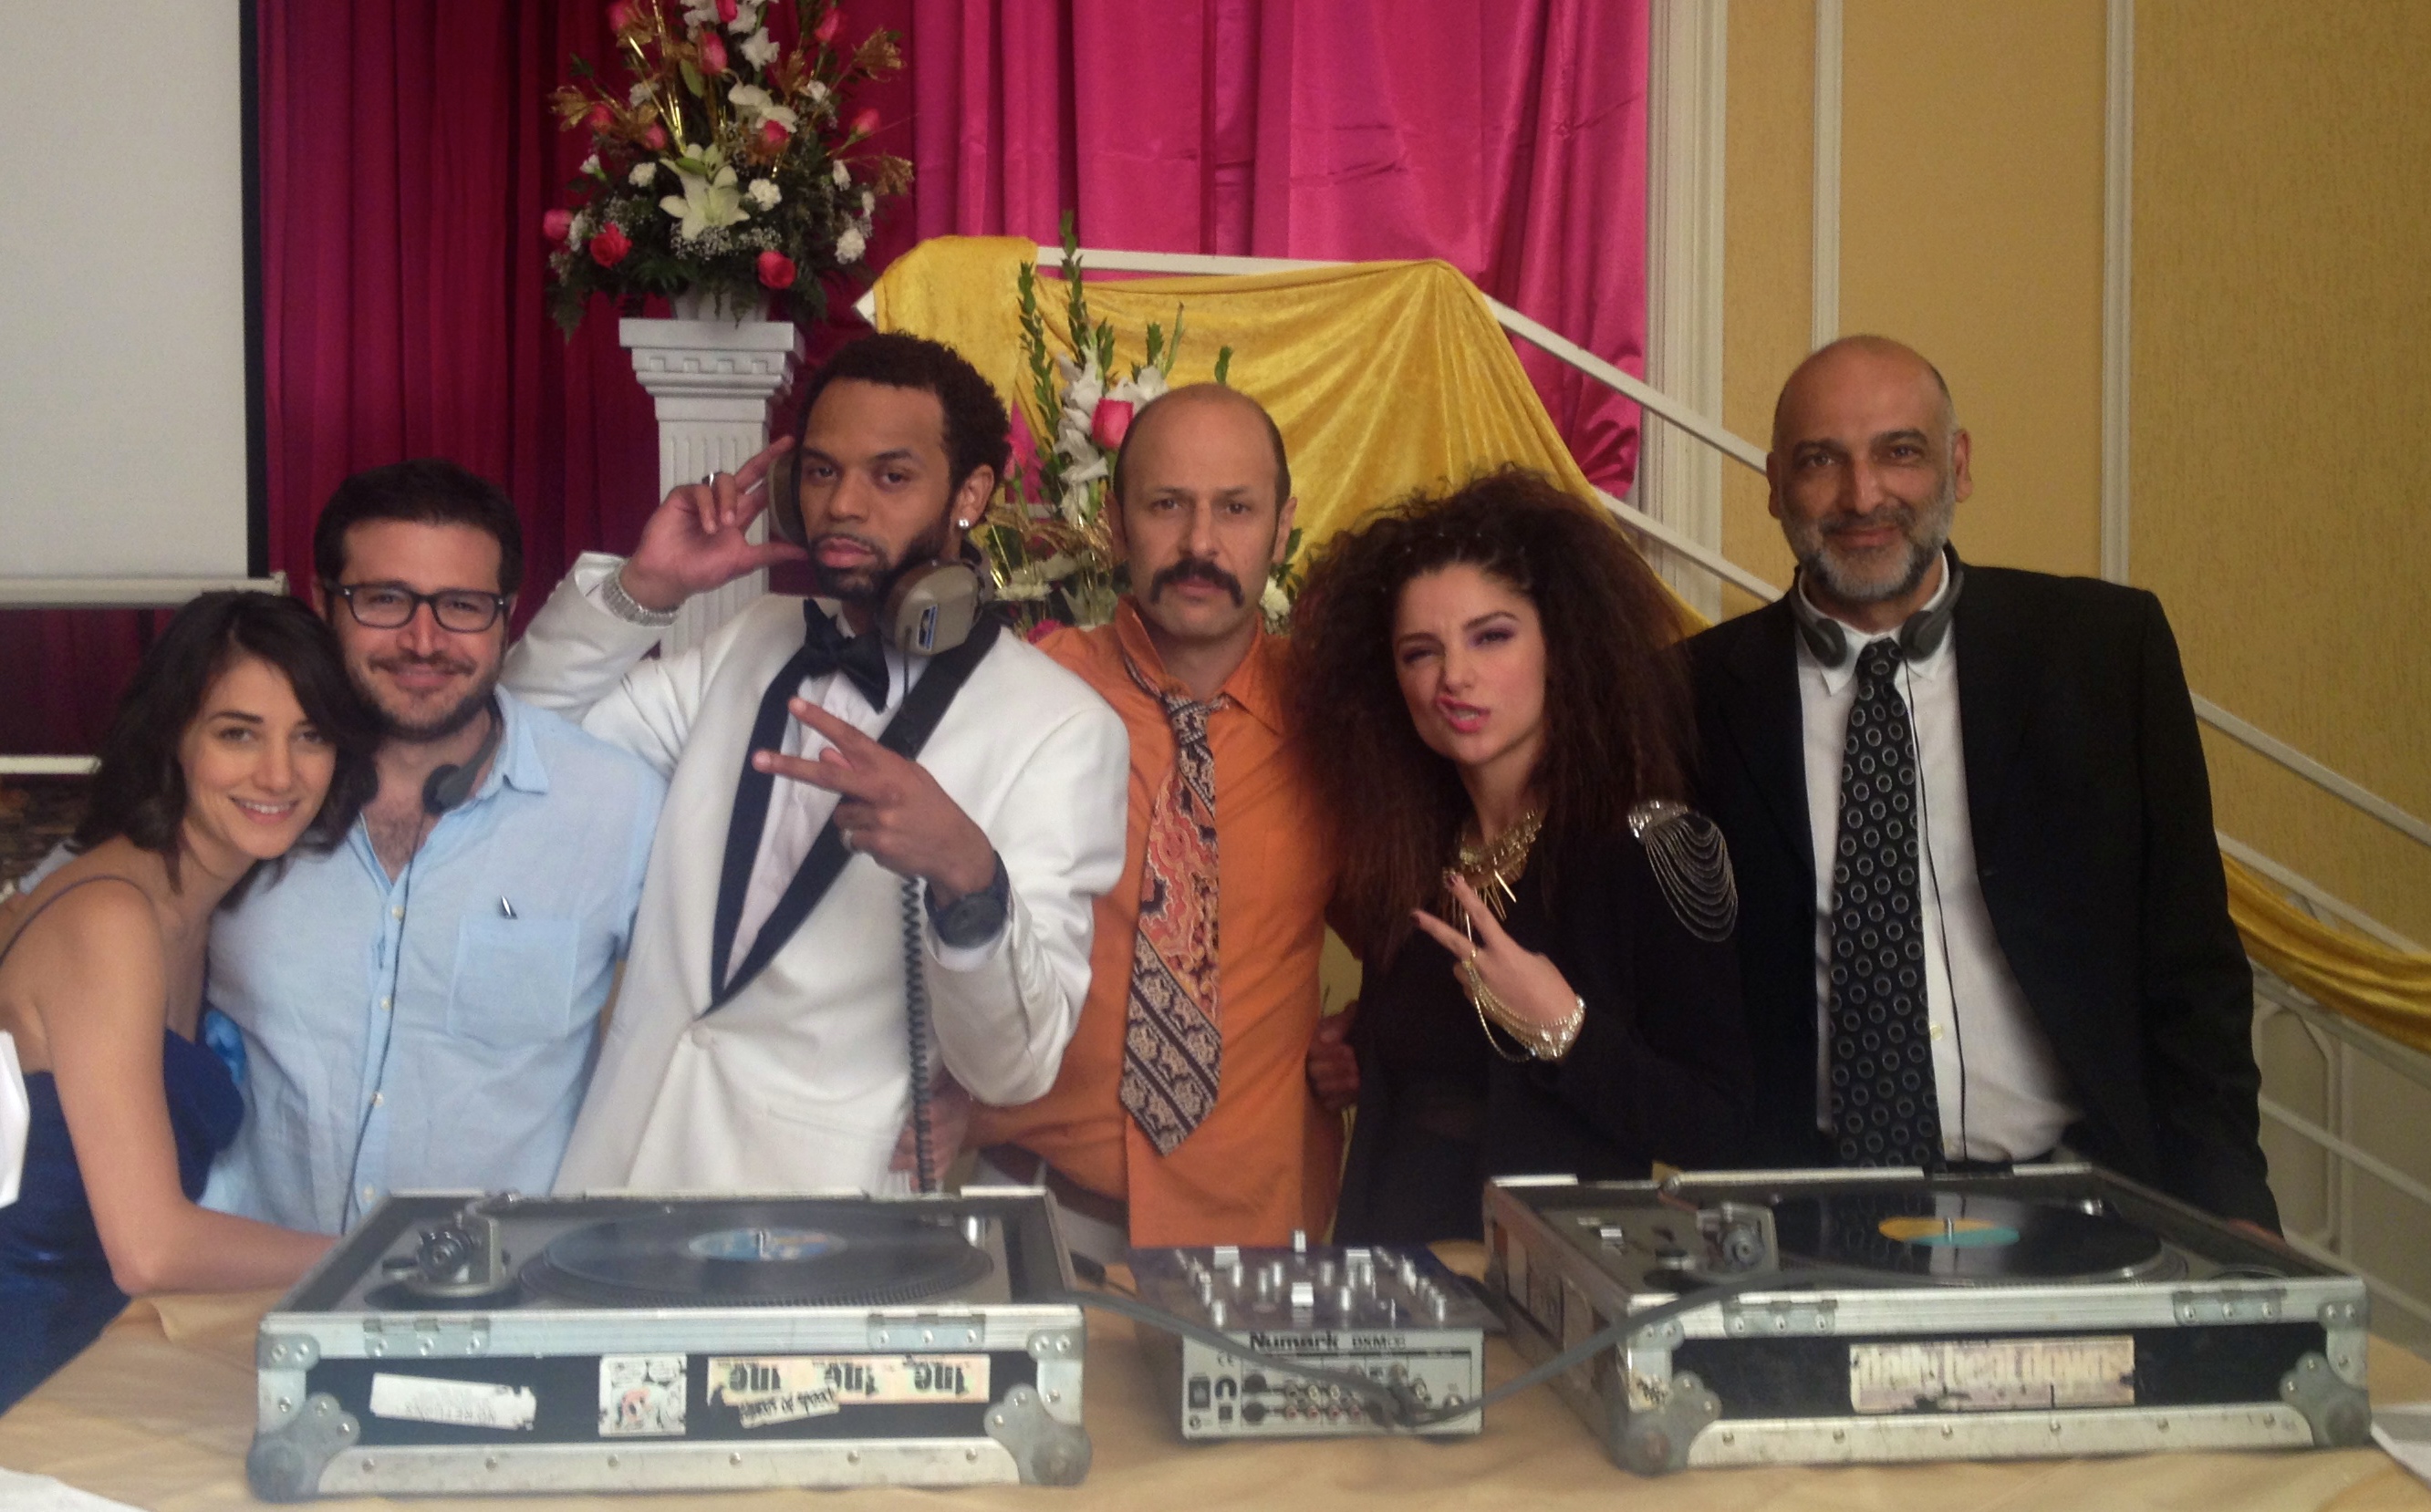 Sheila Vand, Jonathan Kesselman, MC Tehran, Maz Jobrani, Tara Grammy, Amir Ohebsion on set of Jimmy Vestvood